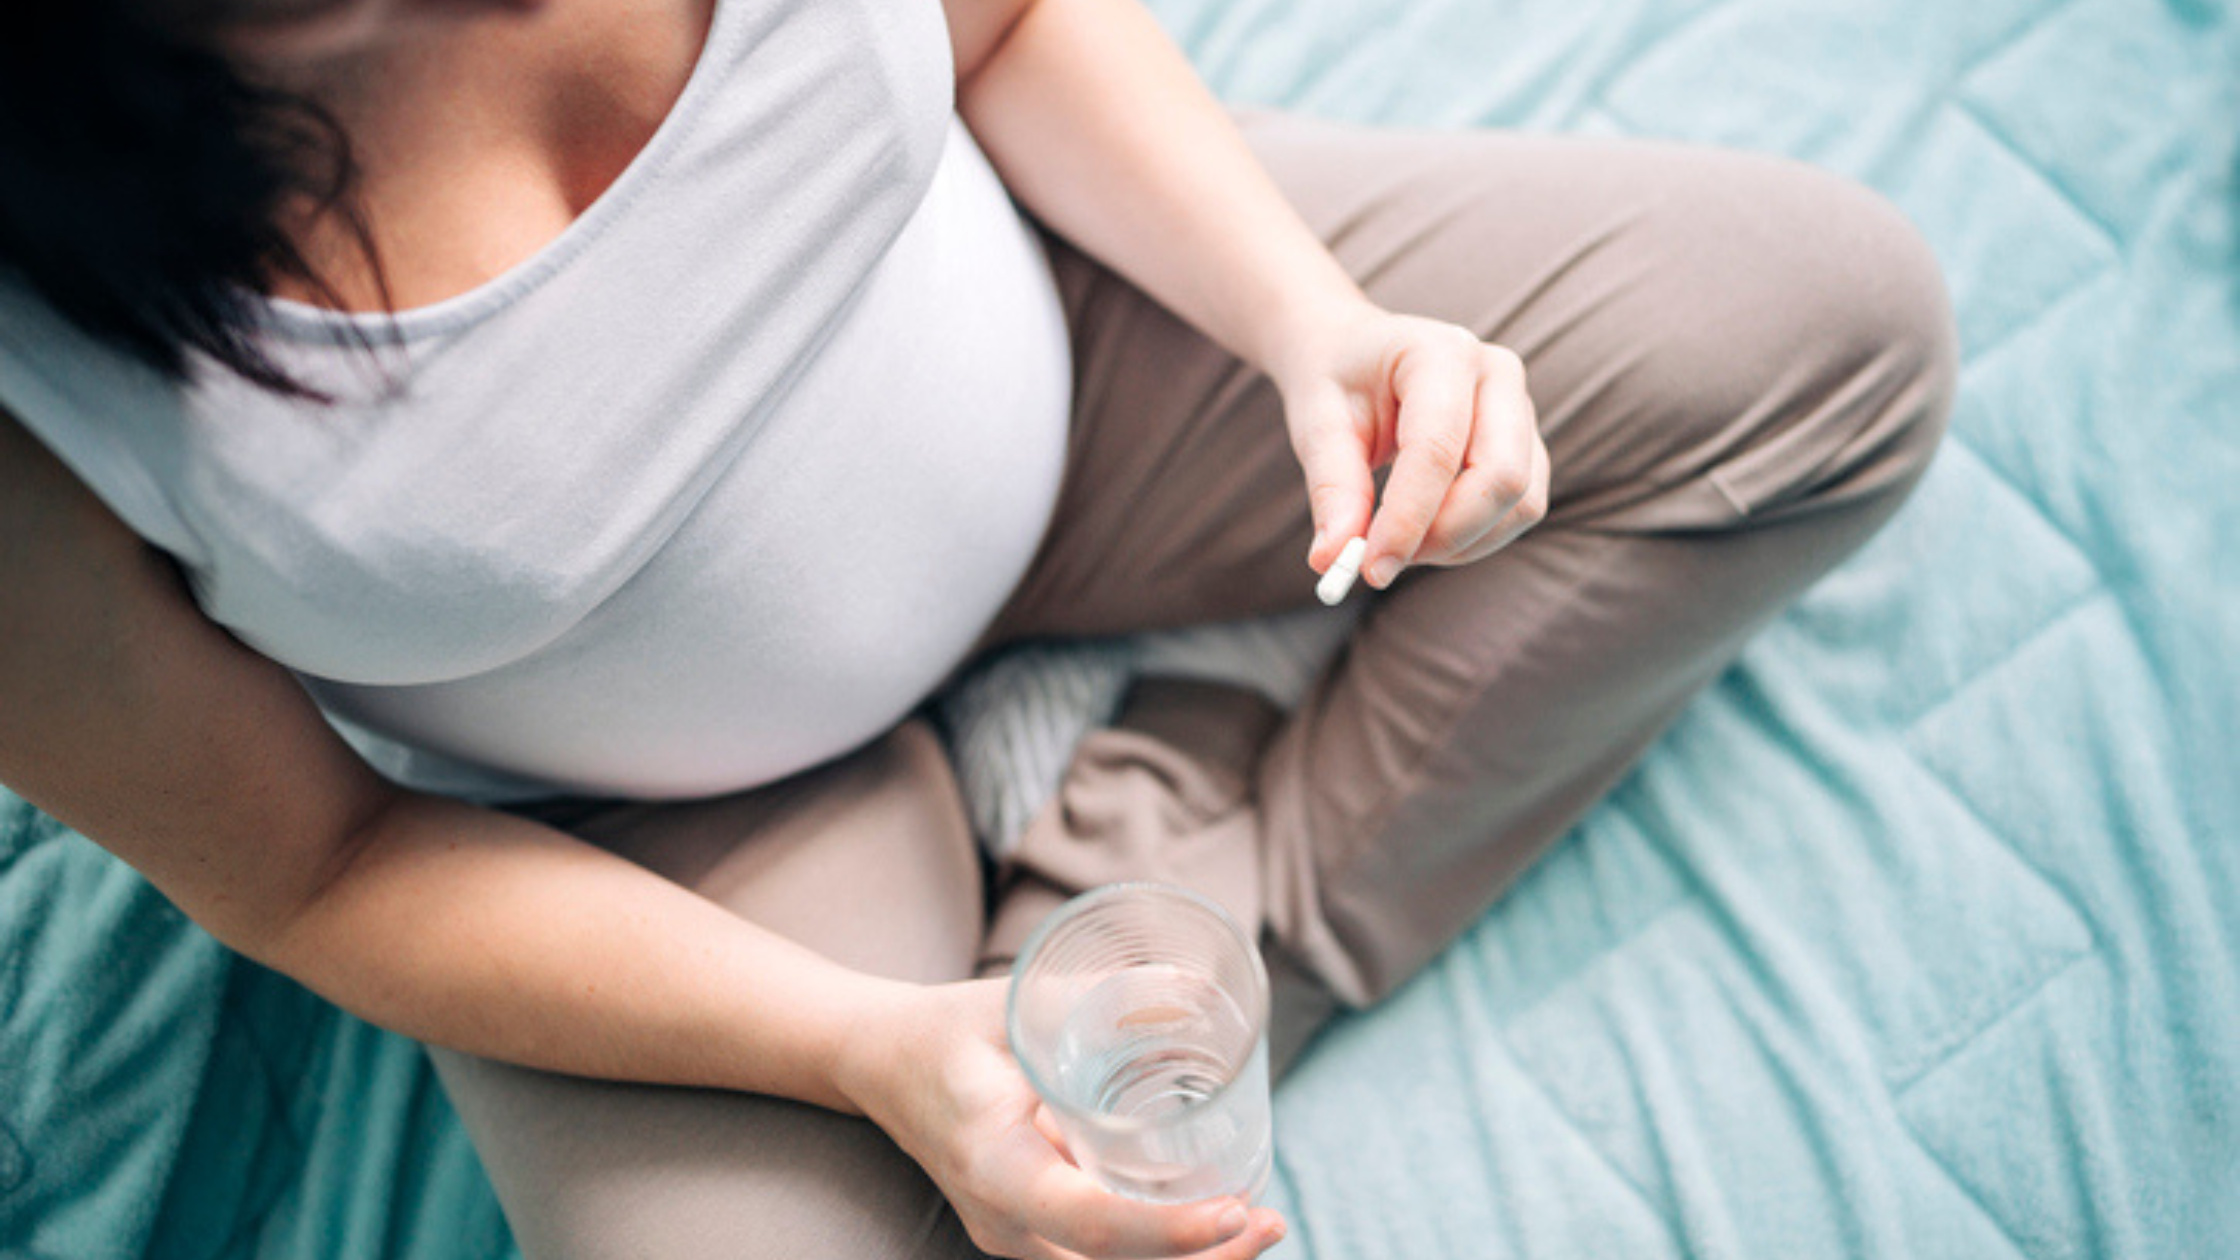 Can You Take Resveratrol While Pregnant?